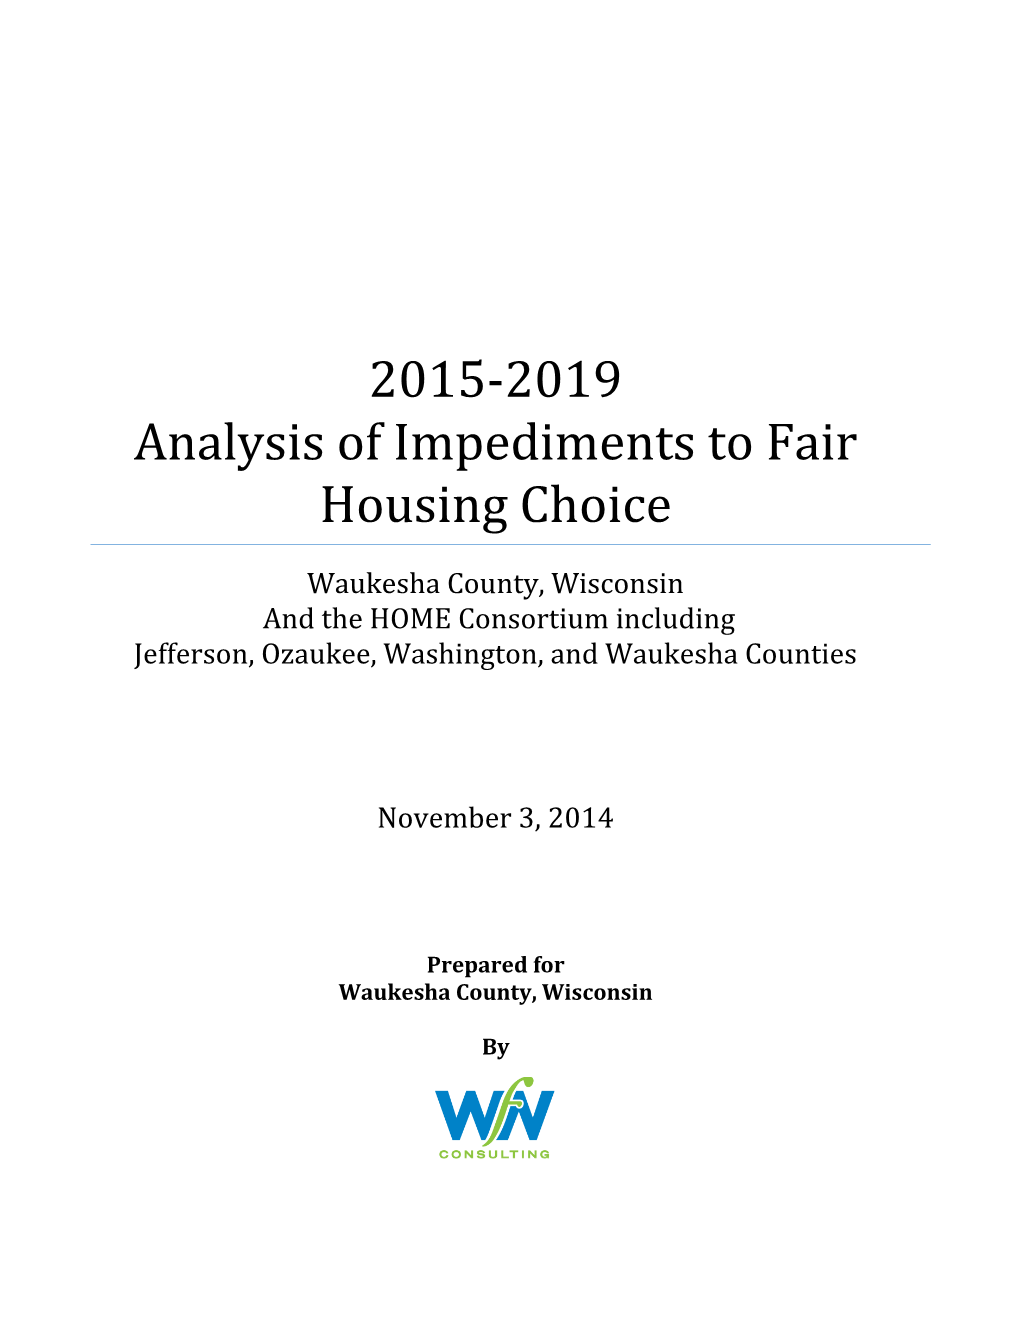 2015-2019 Analysis of Impediments to Fair Housing Choice